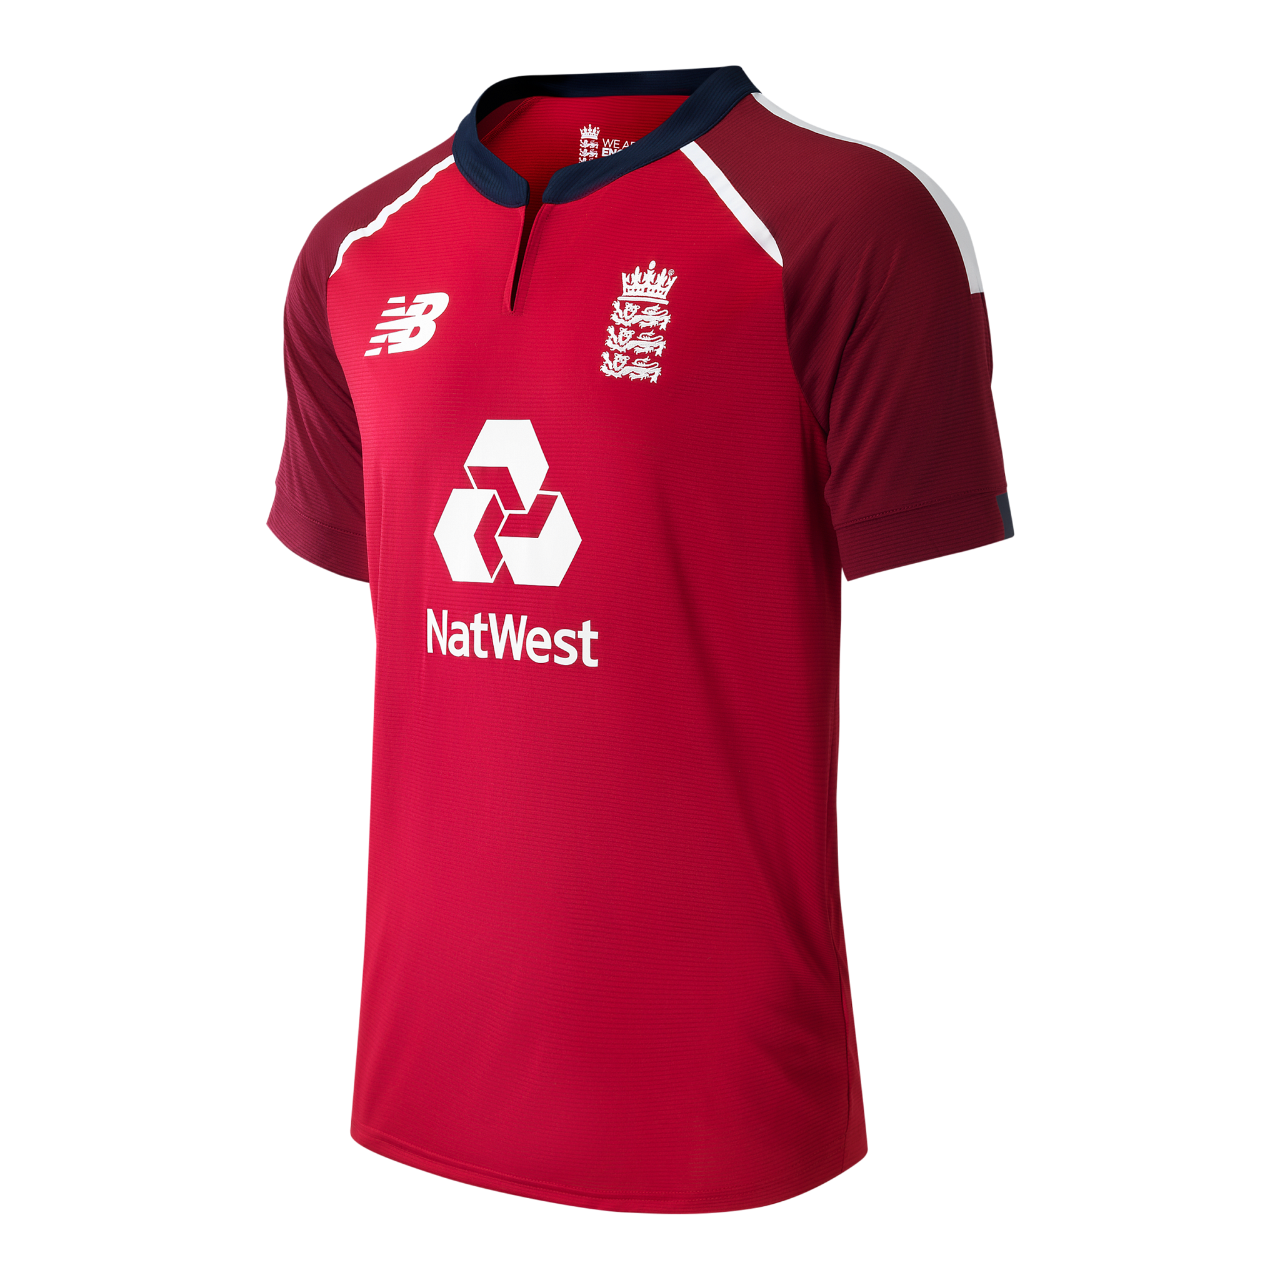 england cricket jersey 2020